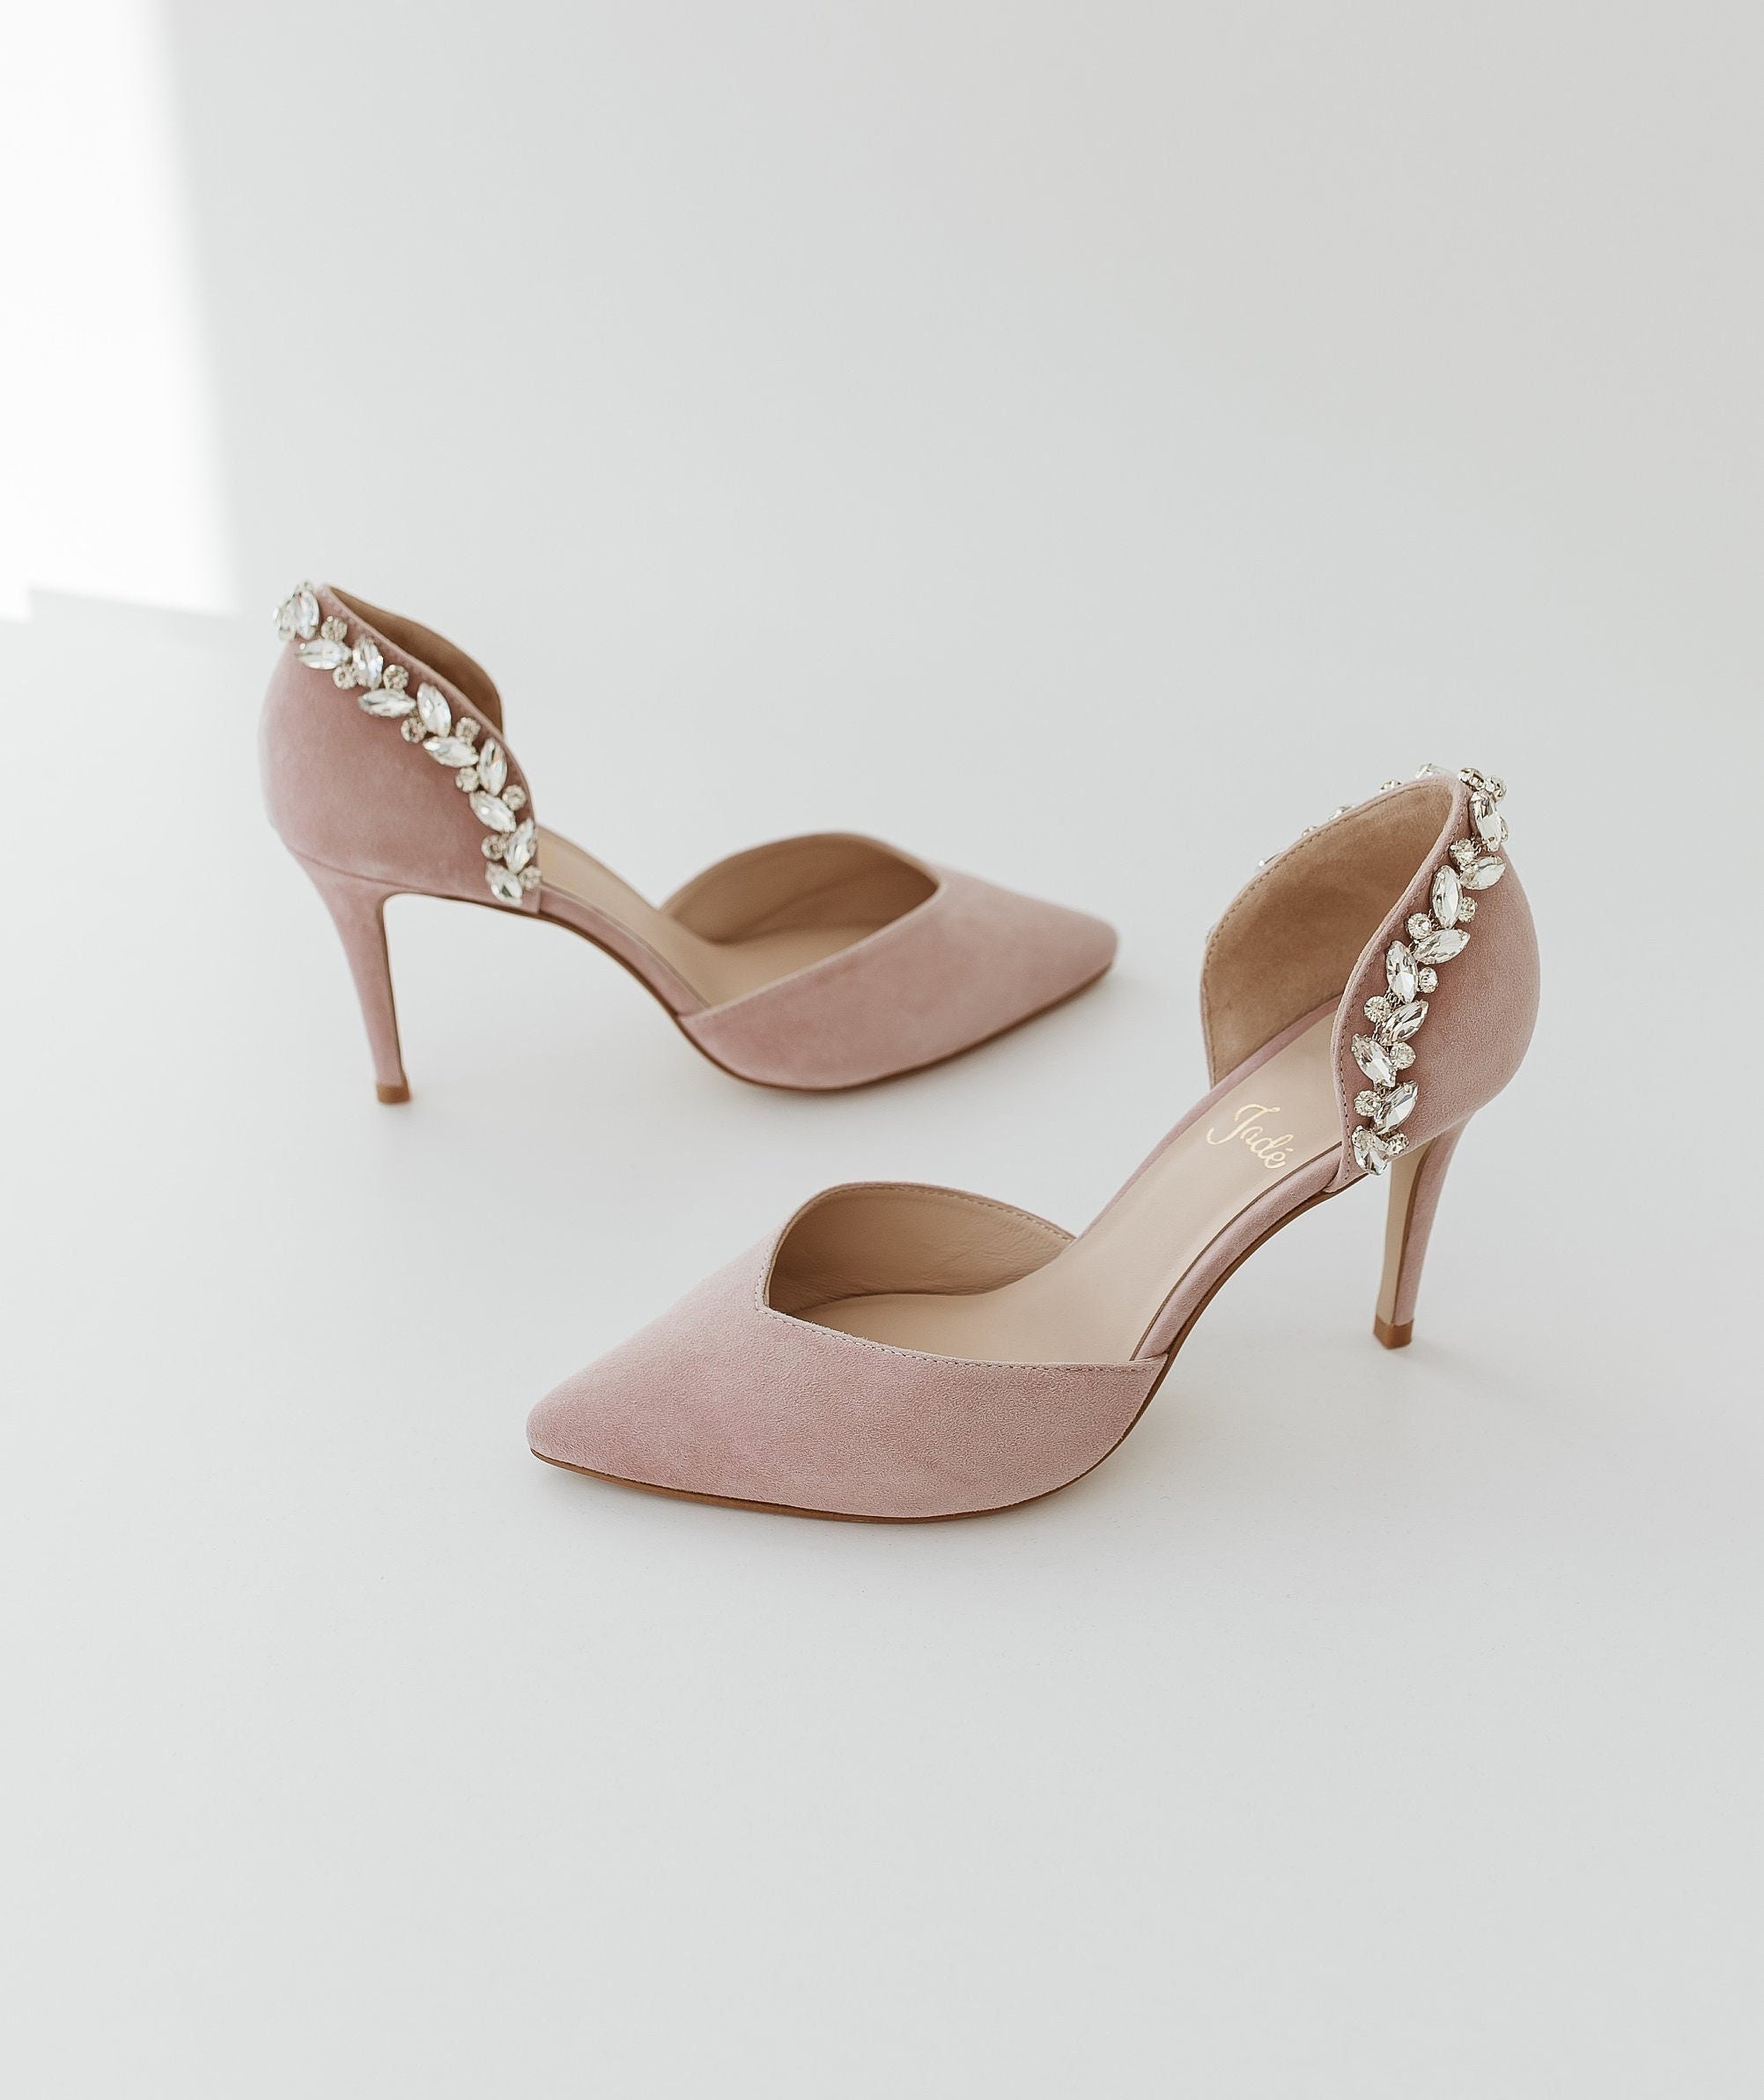 blush pink: Women's Heels | Dillard's